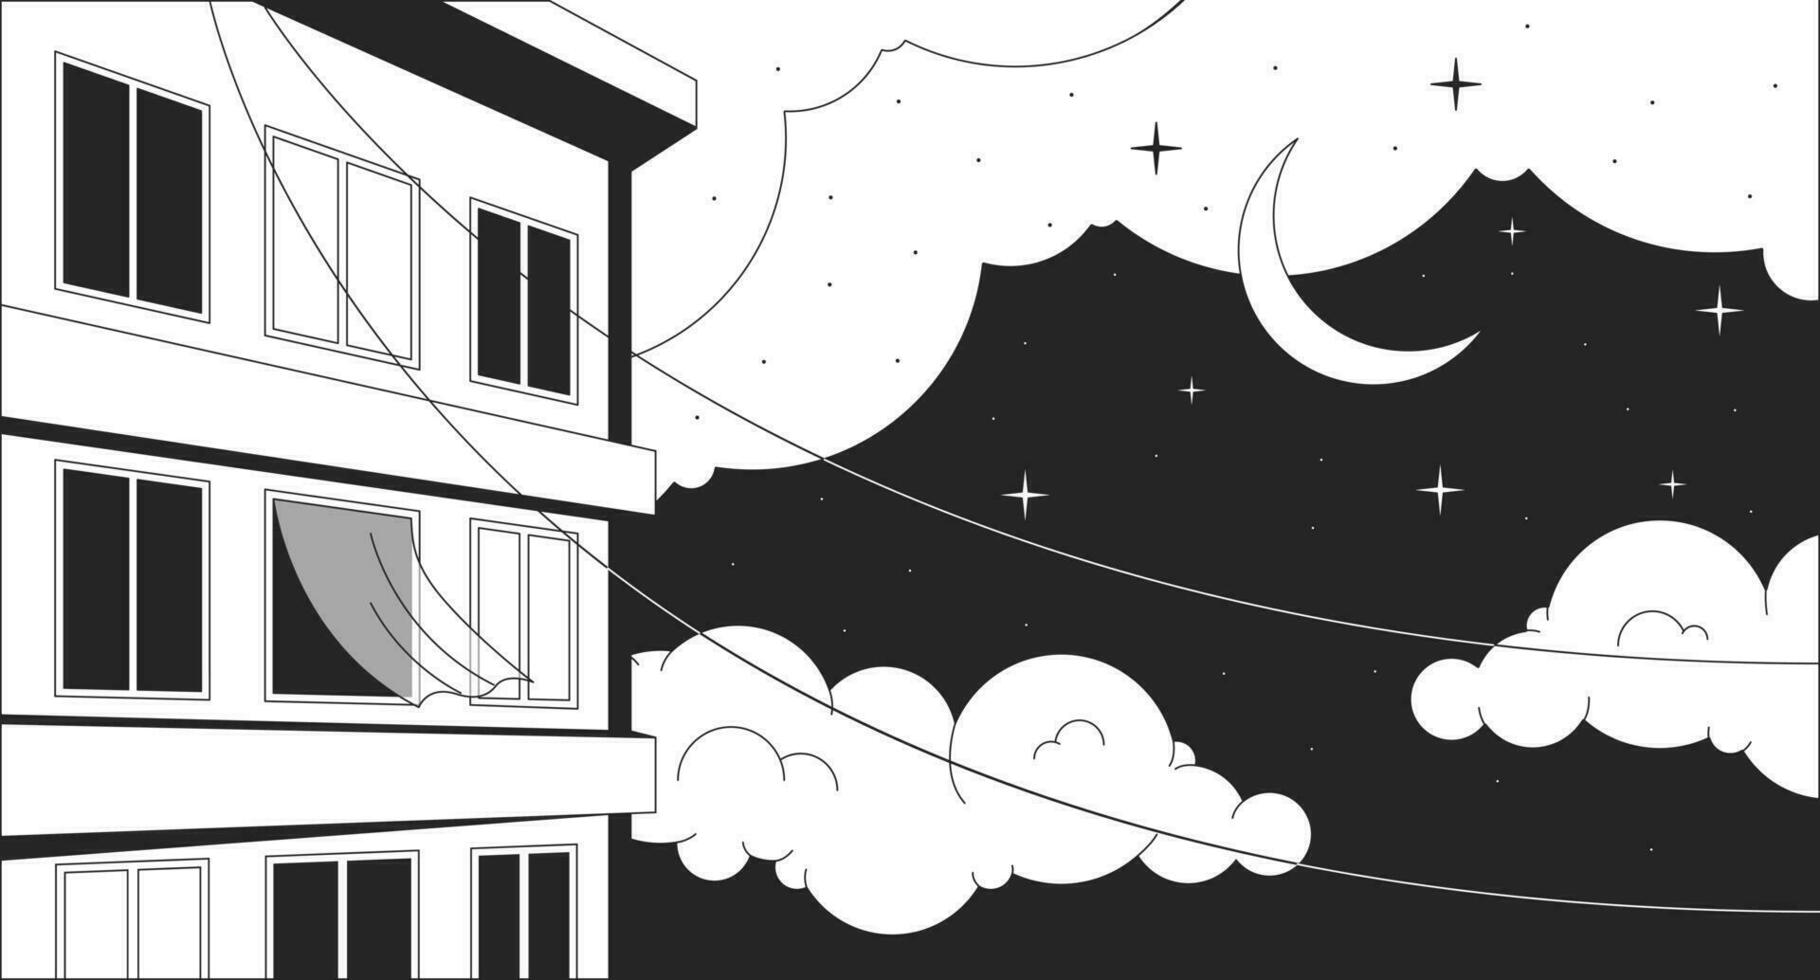 Windows apartment building night black and white lo fi chill wallpaper. Moonlight night sky residential 2D vector cartoon landscape illustration, minimalism background. 80s retro album art, line art